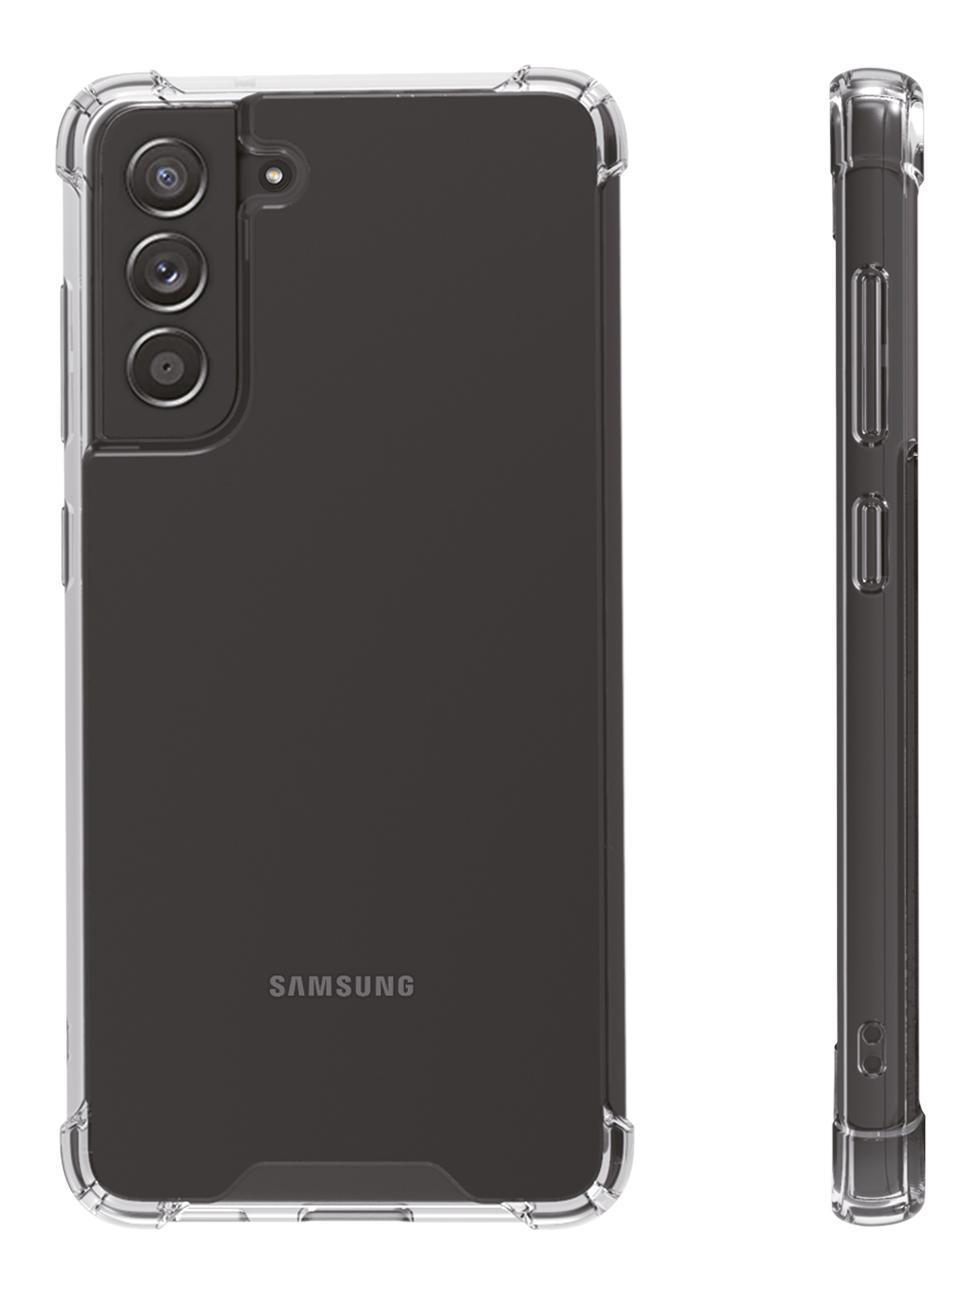 Backcover, Safe and Steady, VIVANCO FE, Shock Galaxy Anti Samsung, S21 Transparent Schutzhülle,